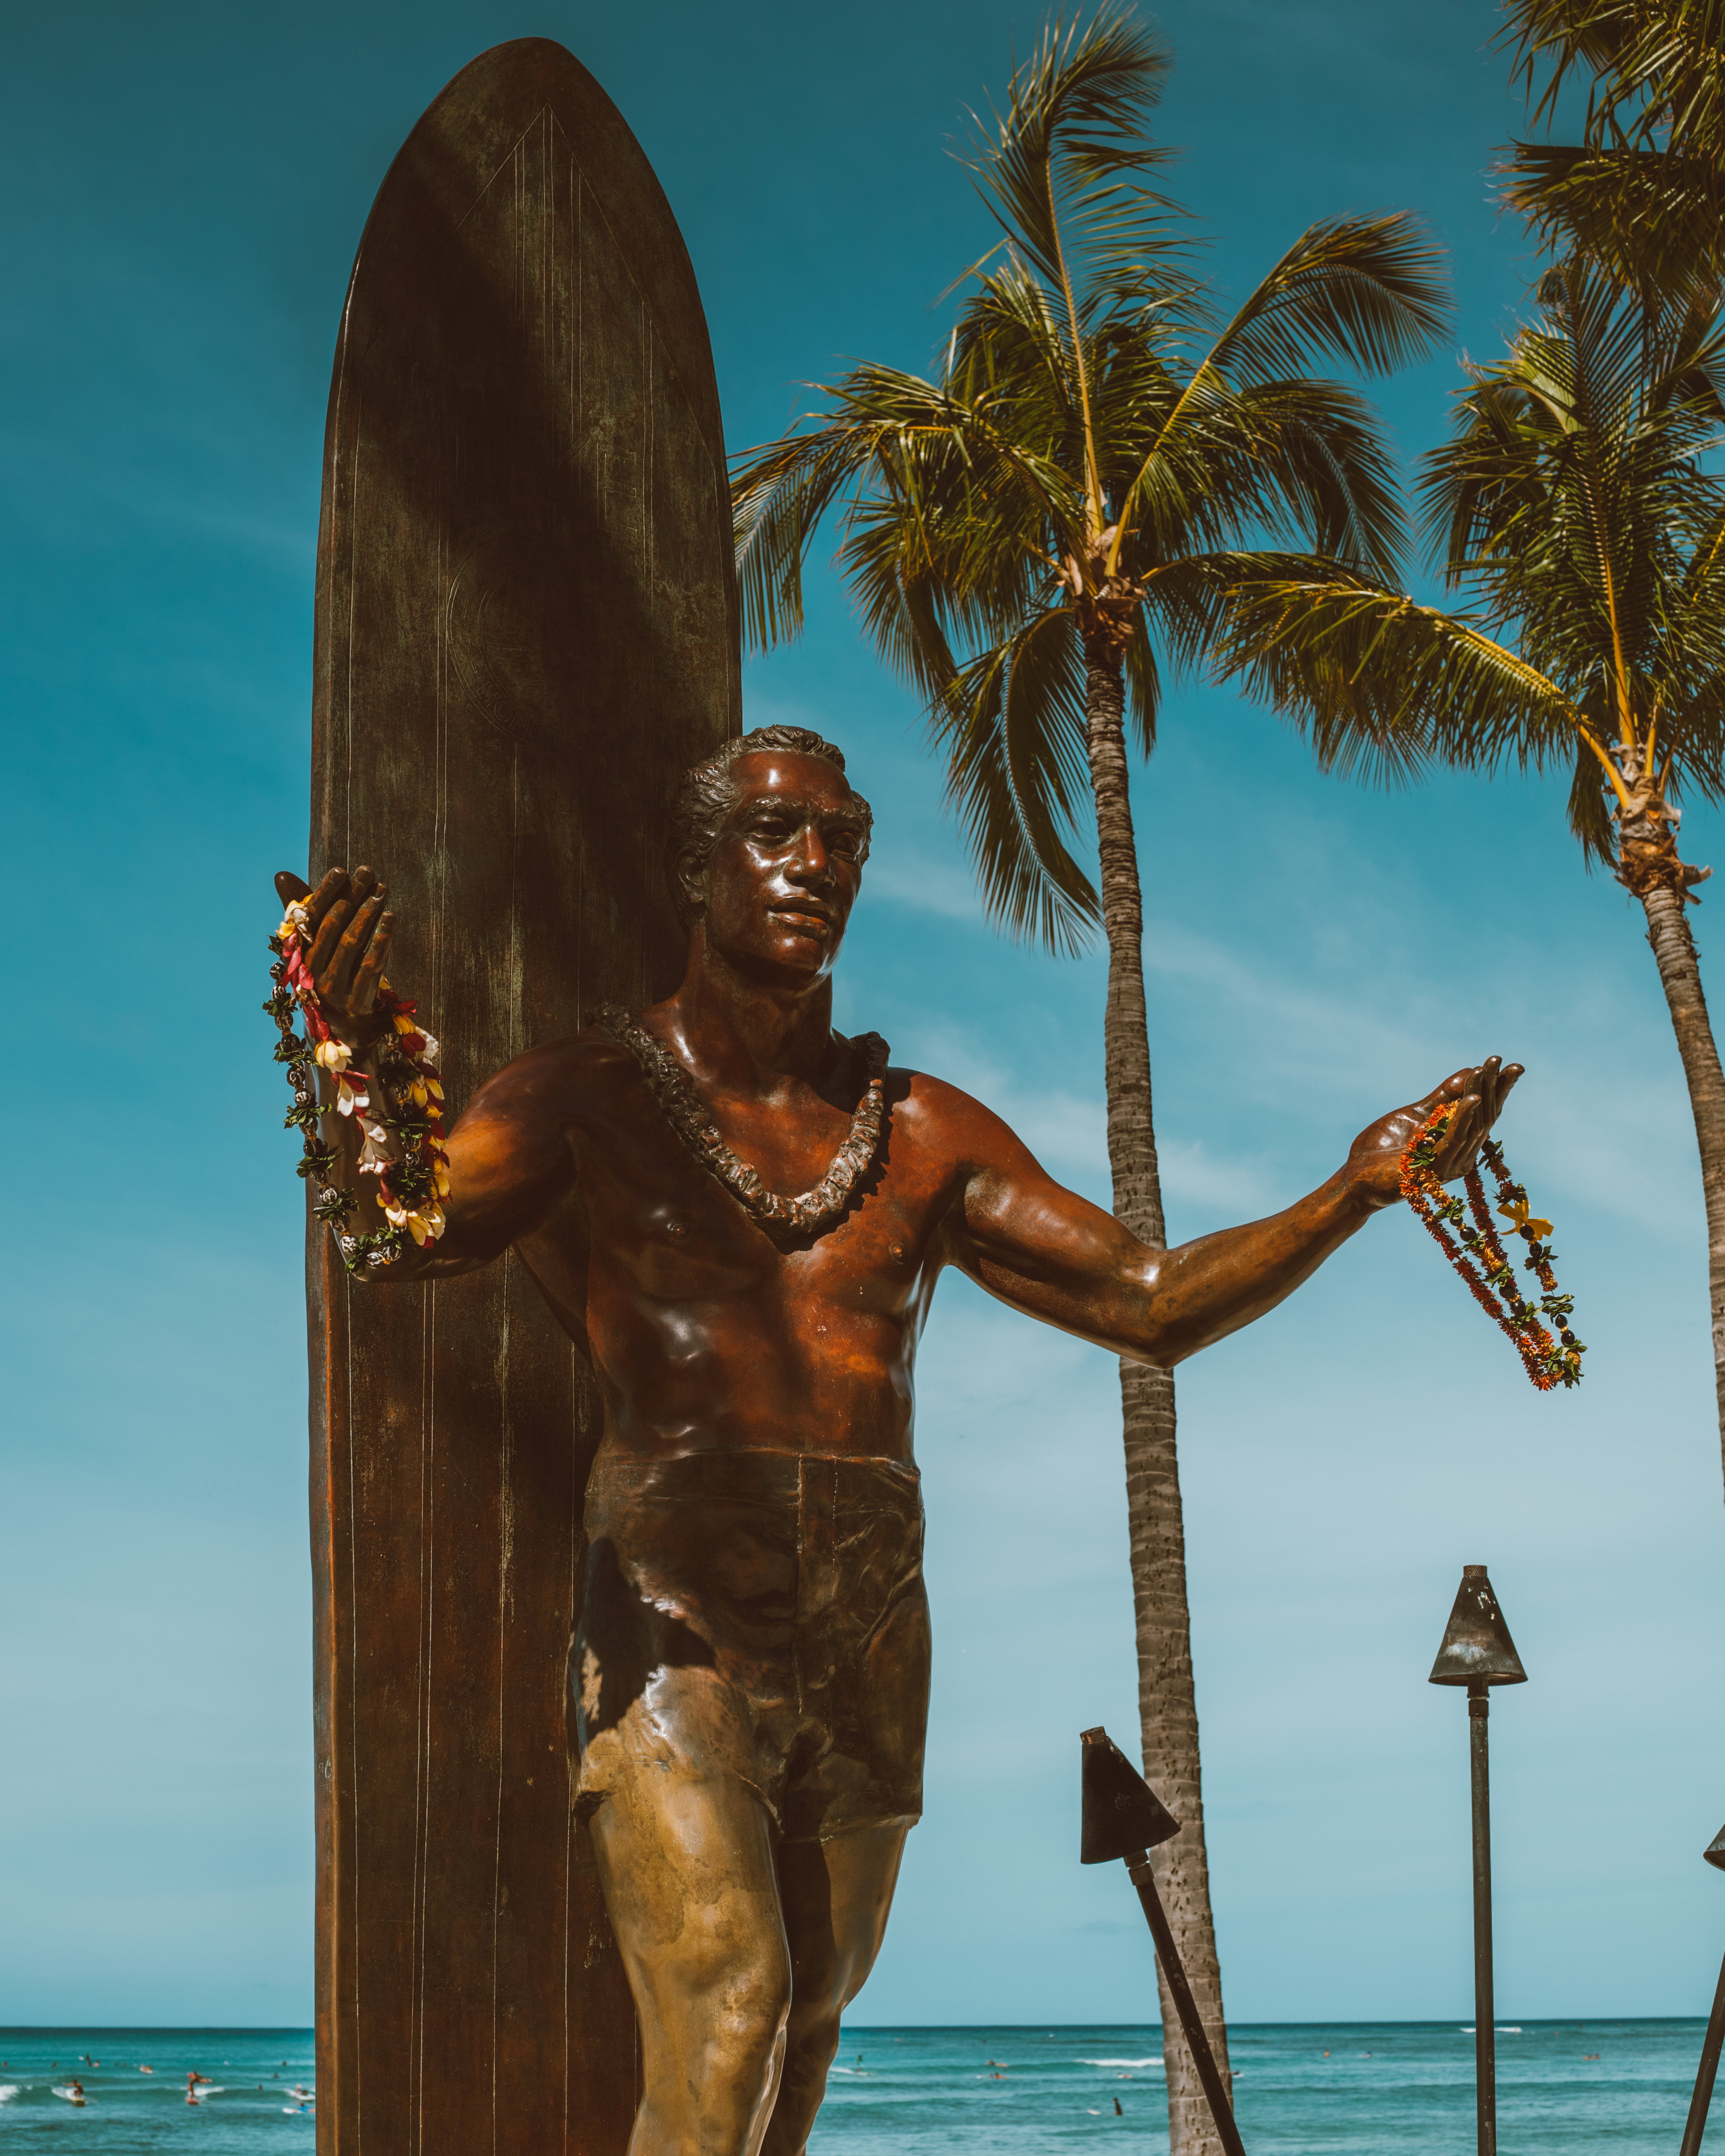 Duke Kahanamoku Statue, Honolulu. https://www.pexels.com/photo/duke-paoa-kahanamoku-statue-in-hawaii-5232926/